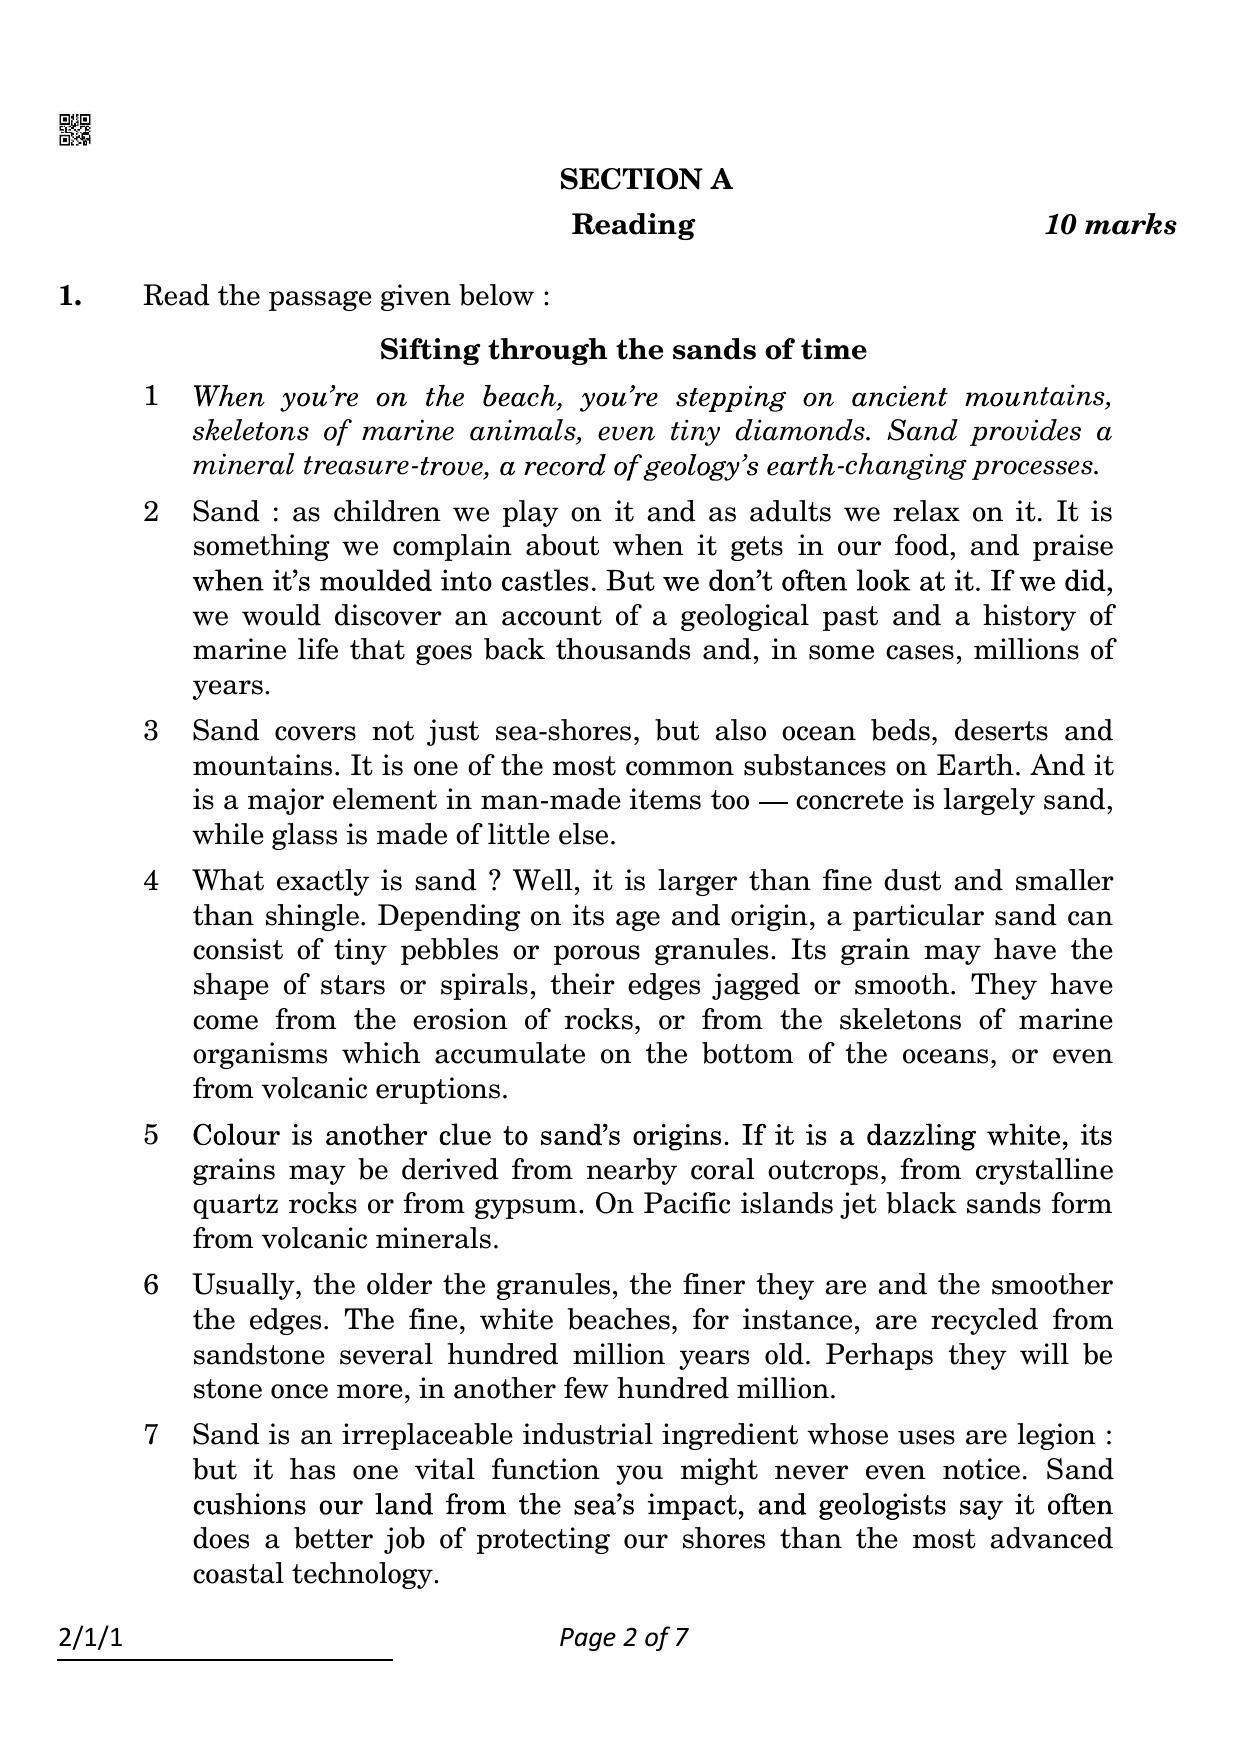 CBSE Class 10 2-1-1 English L & L 2022 Question Paper - Page 2